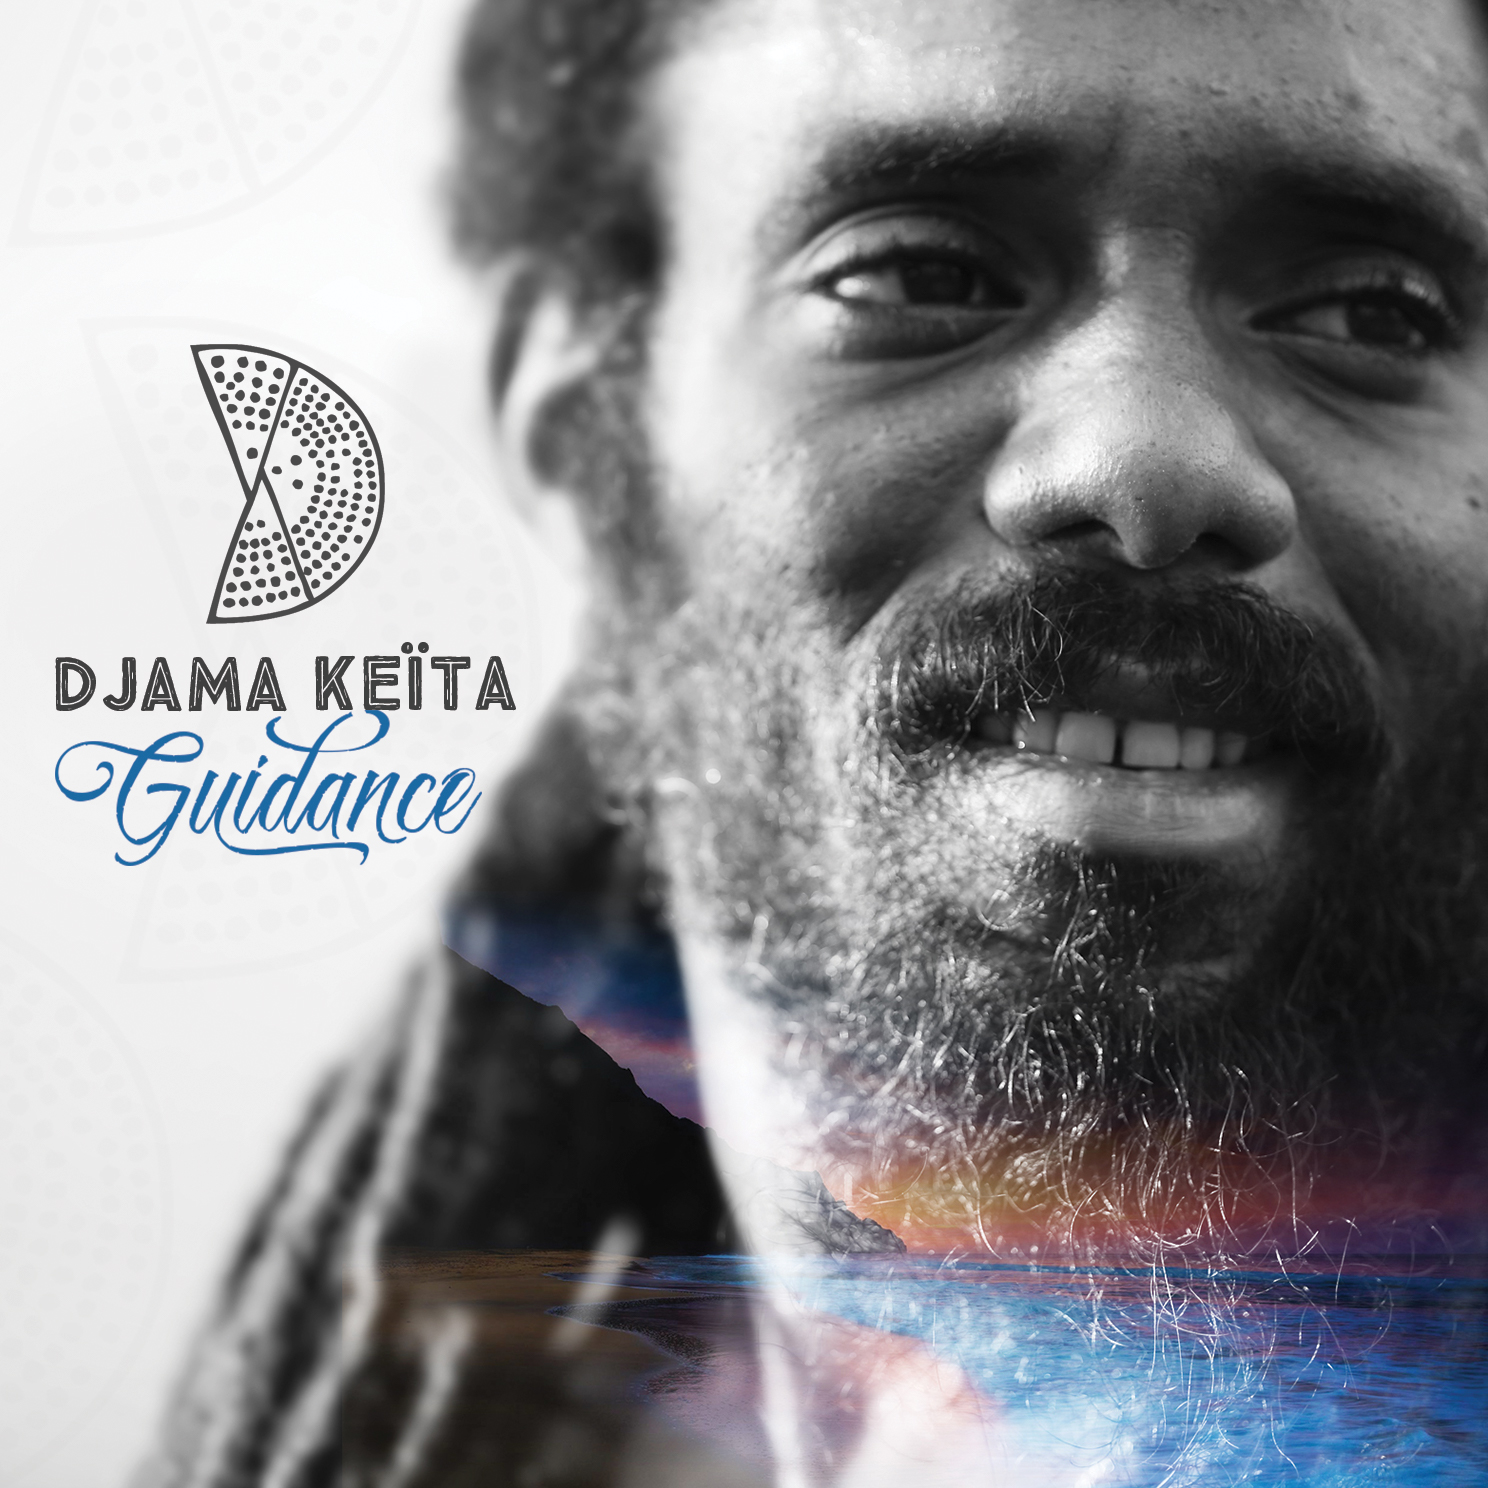 Djama keita guidance cover 2016